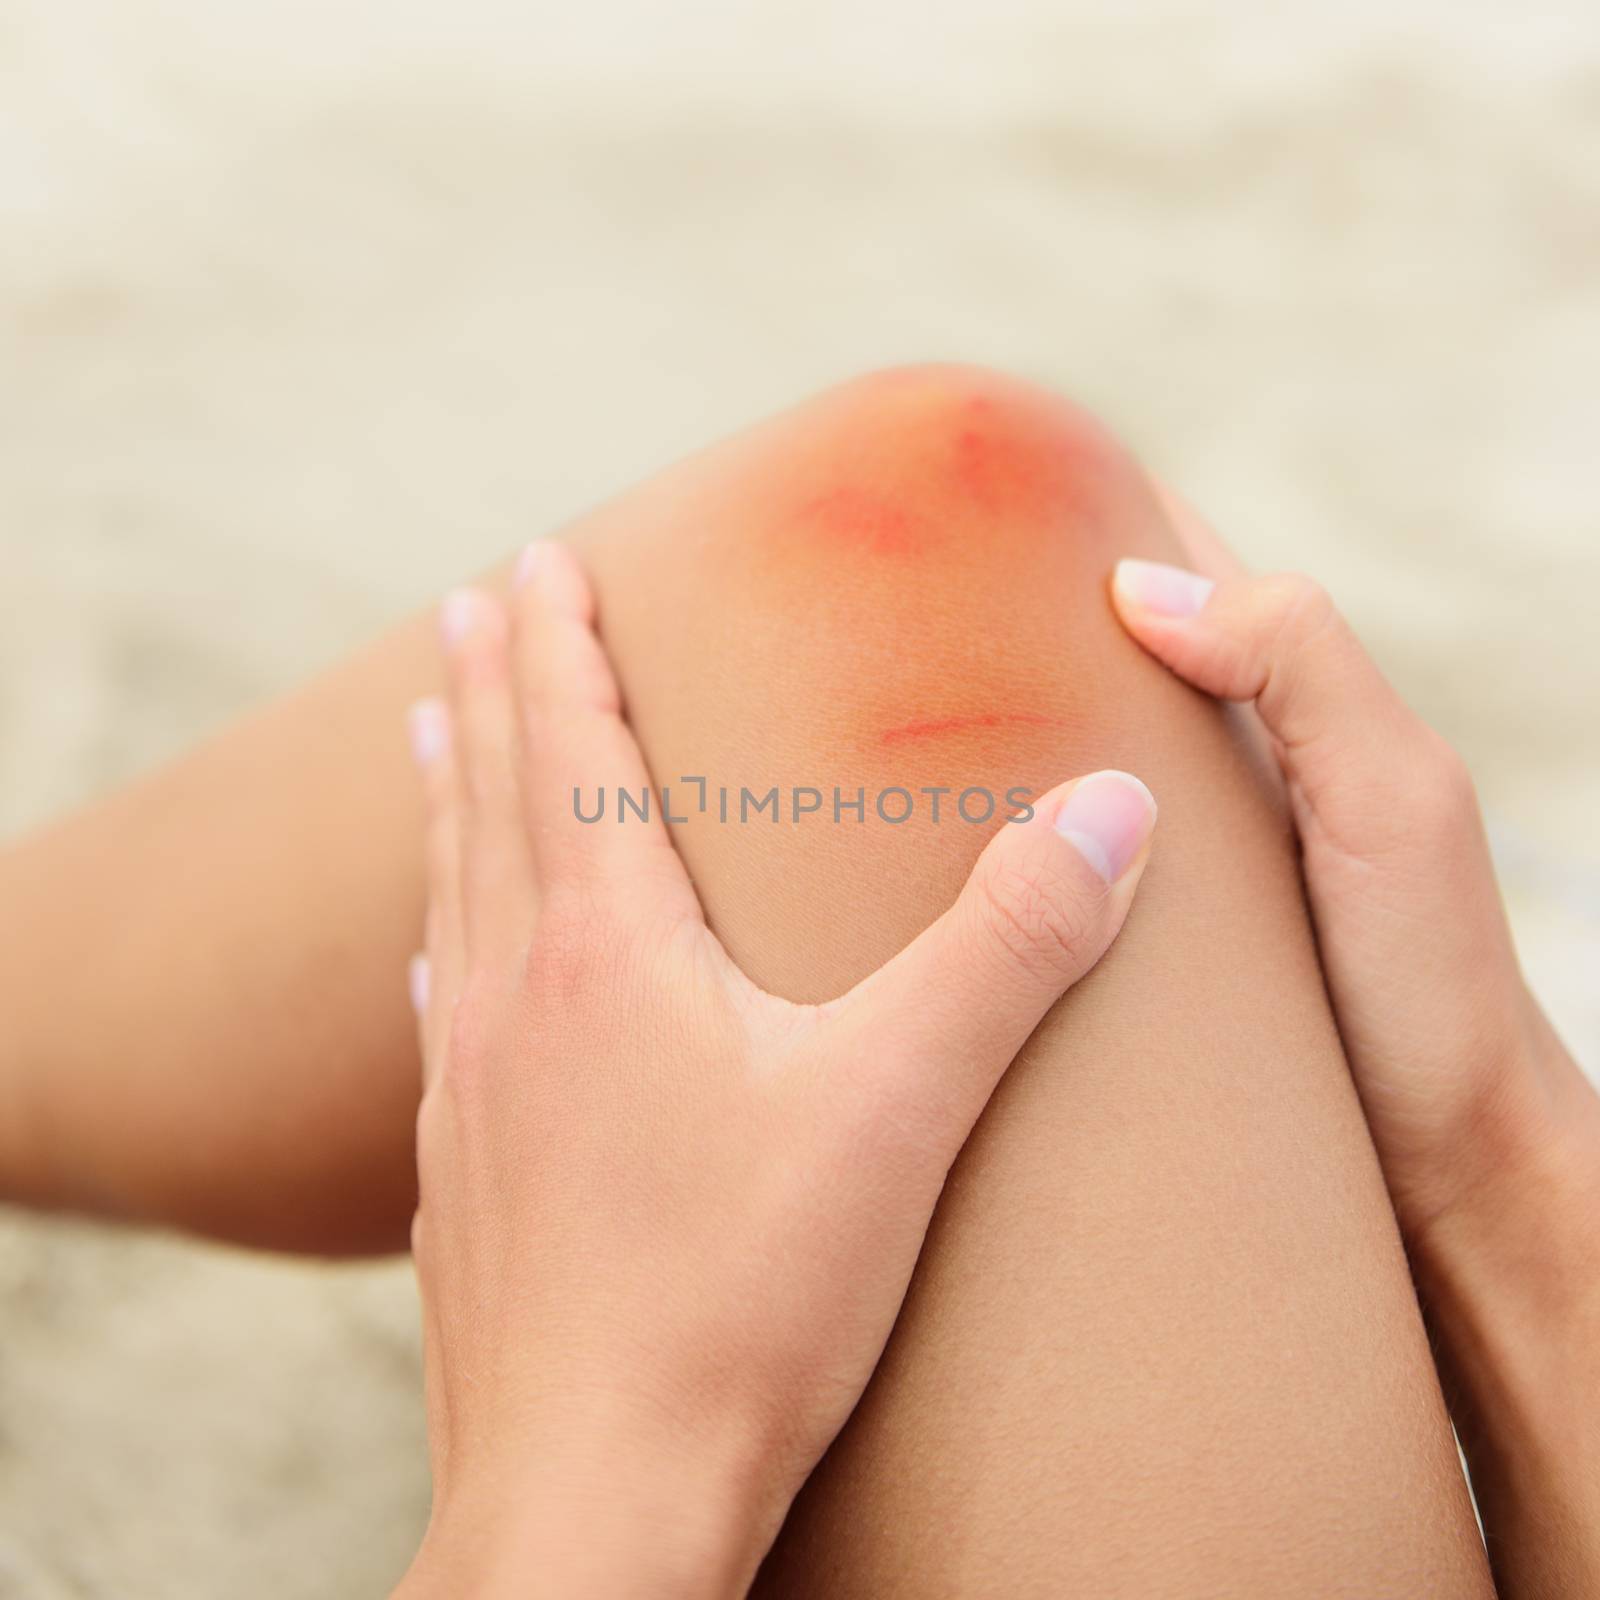 Woman nursing a bruised grazed knee by Maridav